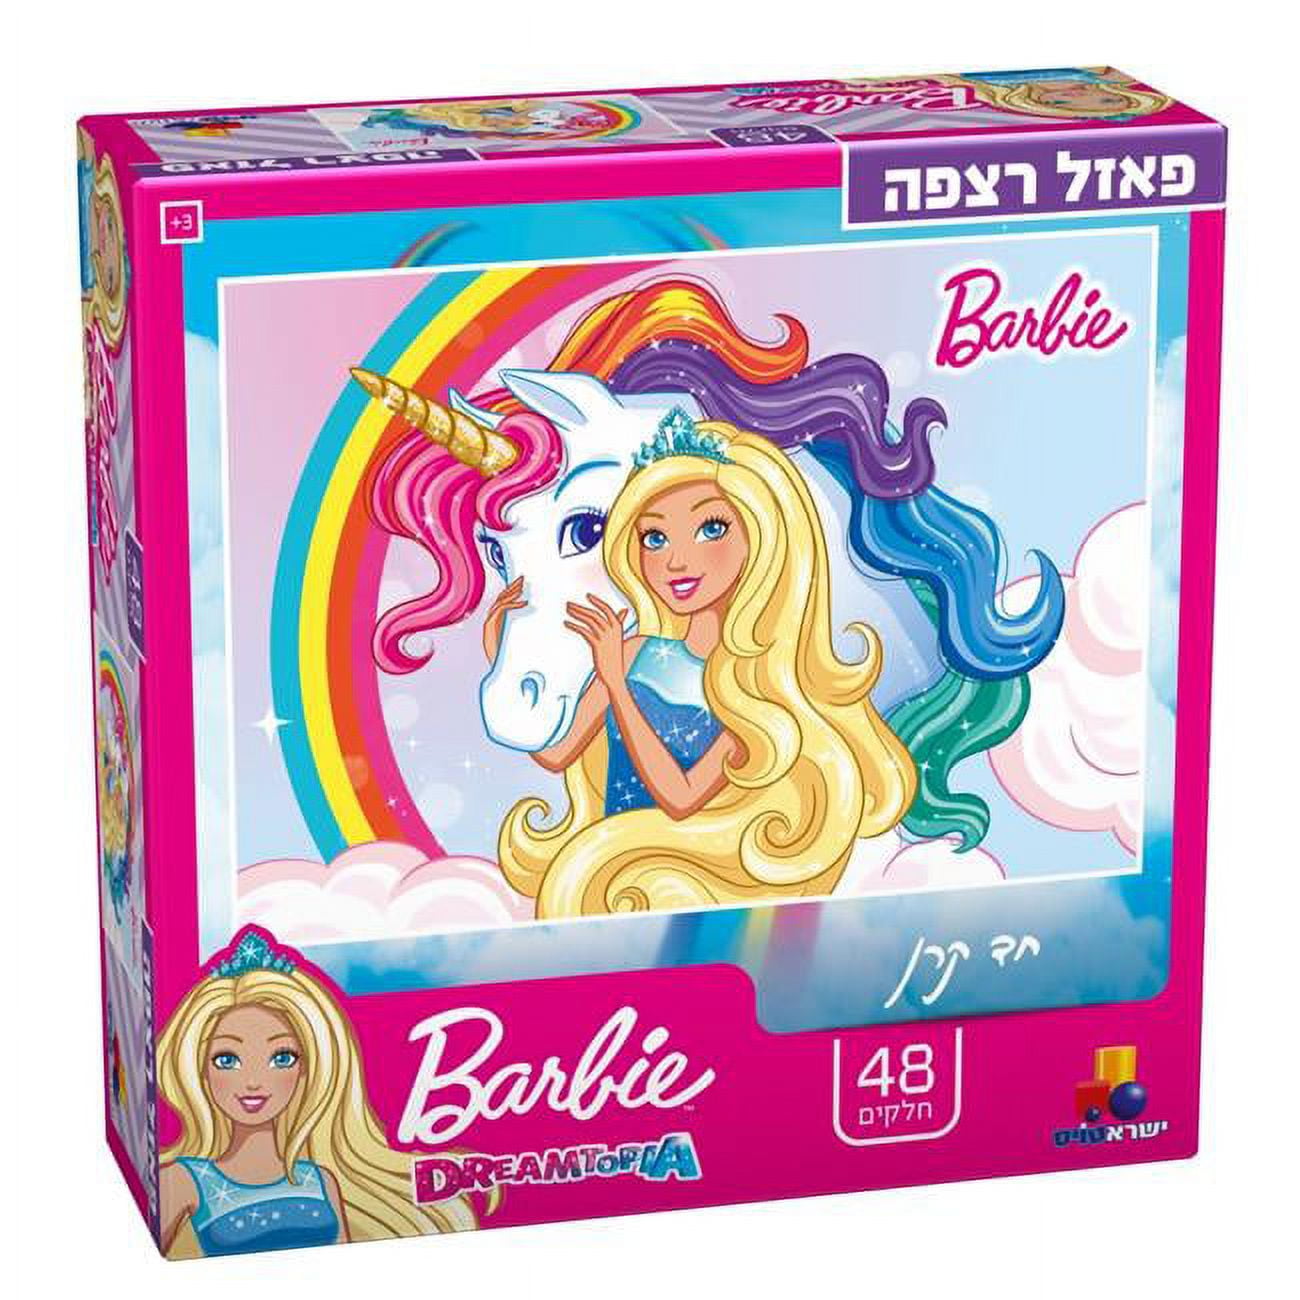 7921 Barbie Puzzle - 48 Piece